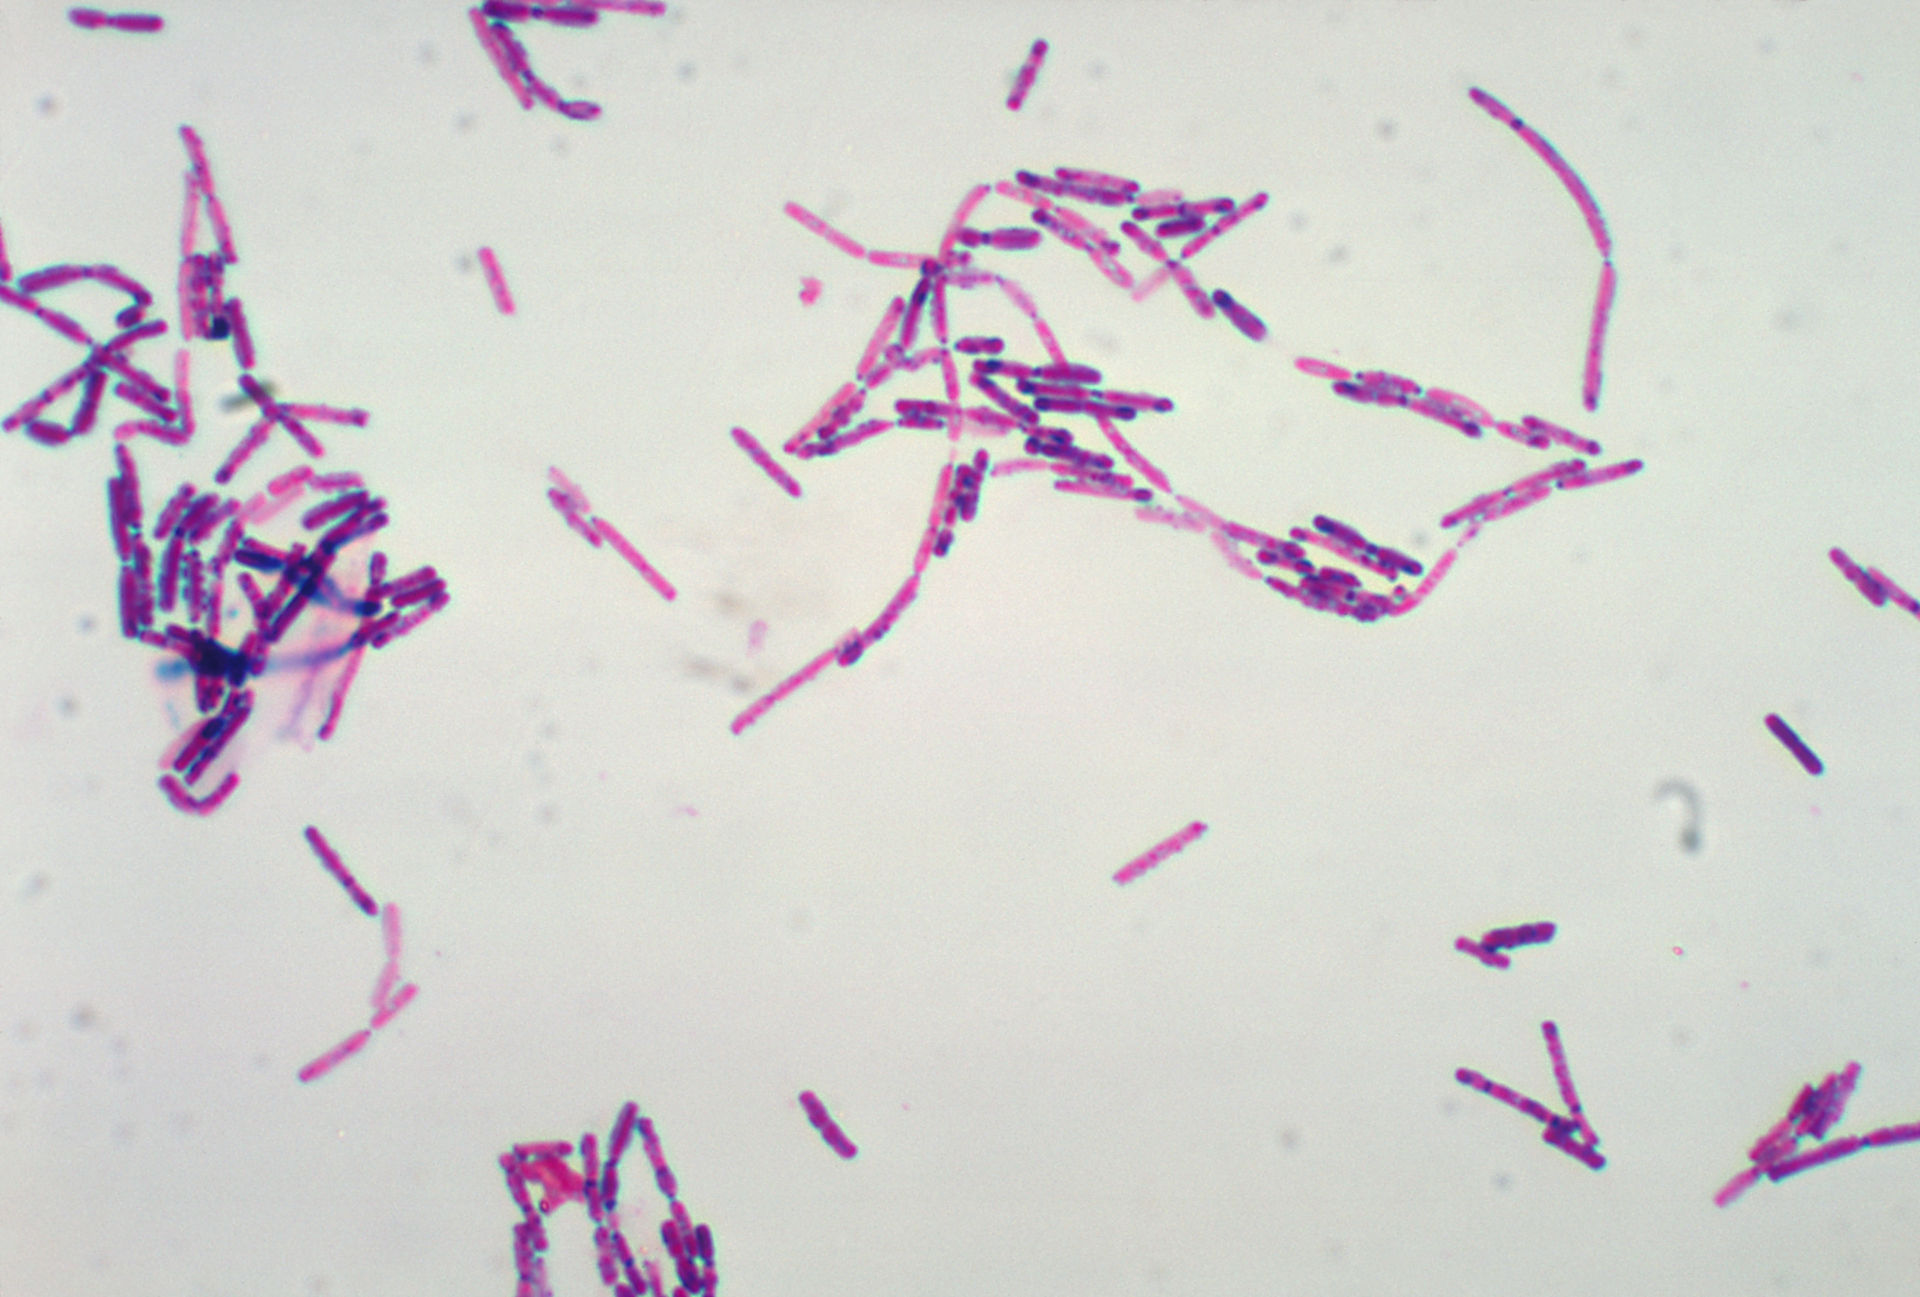 Bacillus cereus (Gramfärbung)